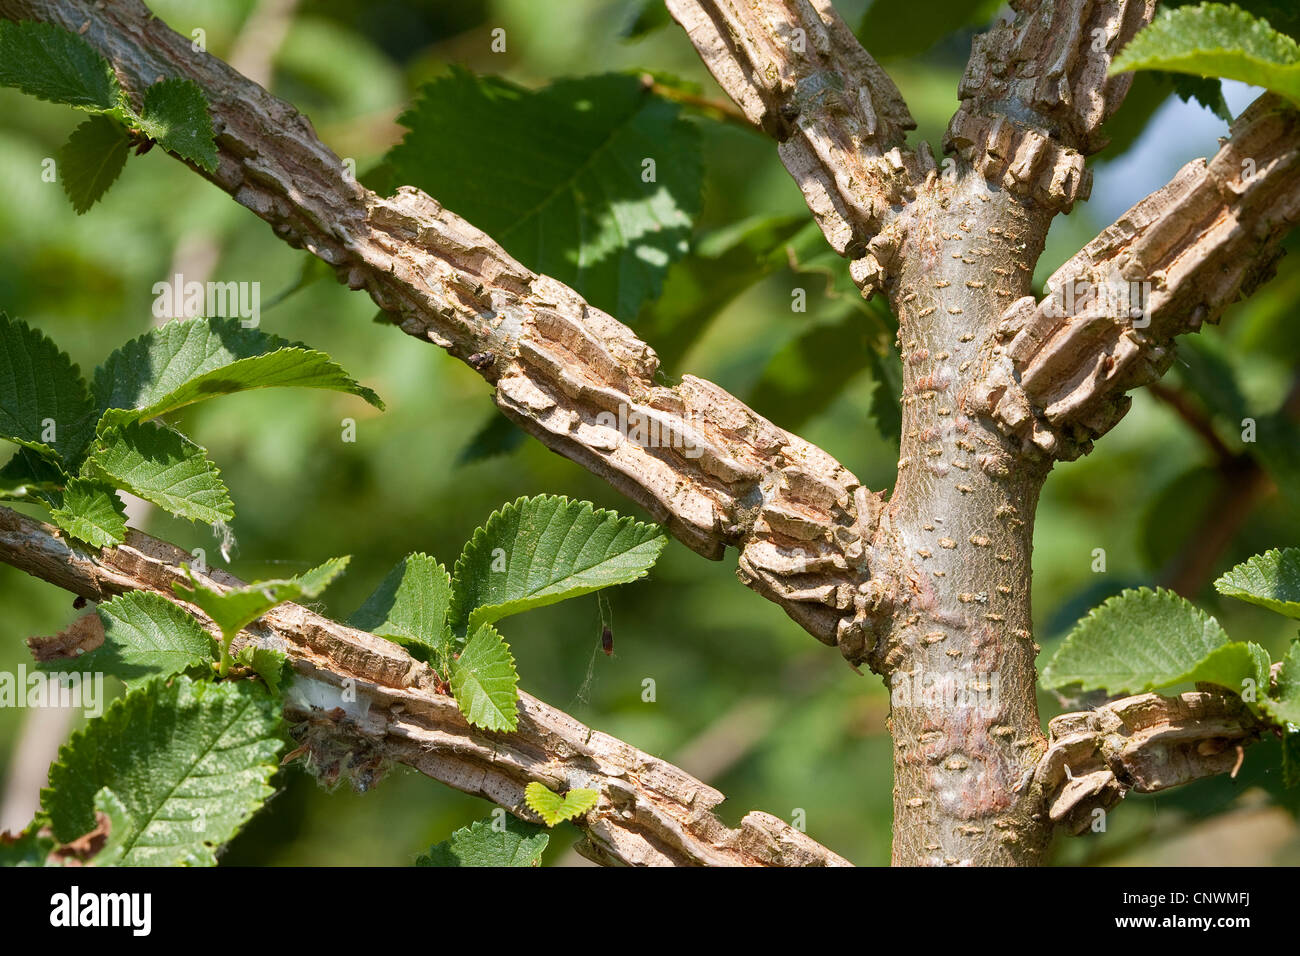 smooth-leaf elm (Ulmus minor, Ulmus campestris, Ulmus carpinifolia), branch with cork ledges, Germany Stock Photo